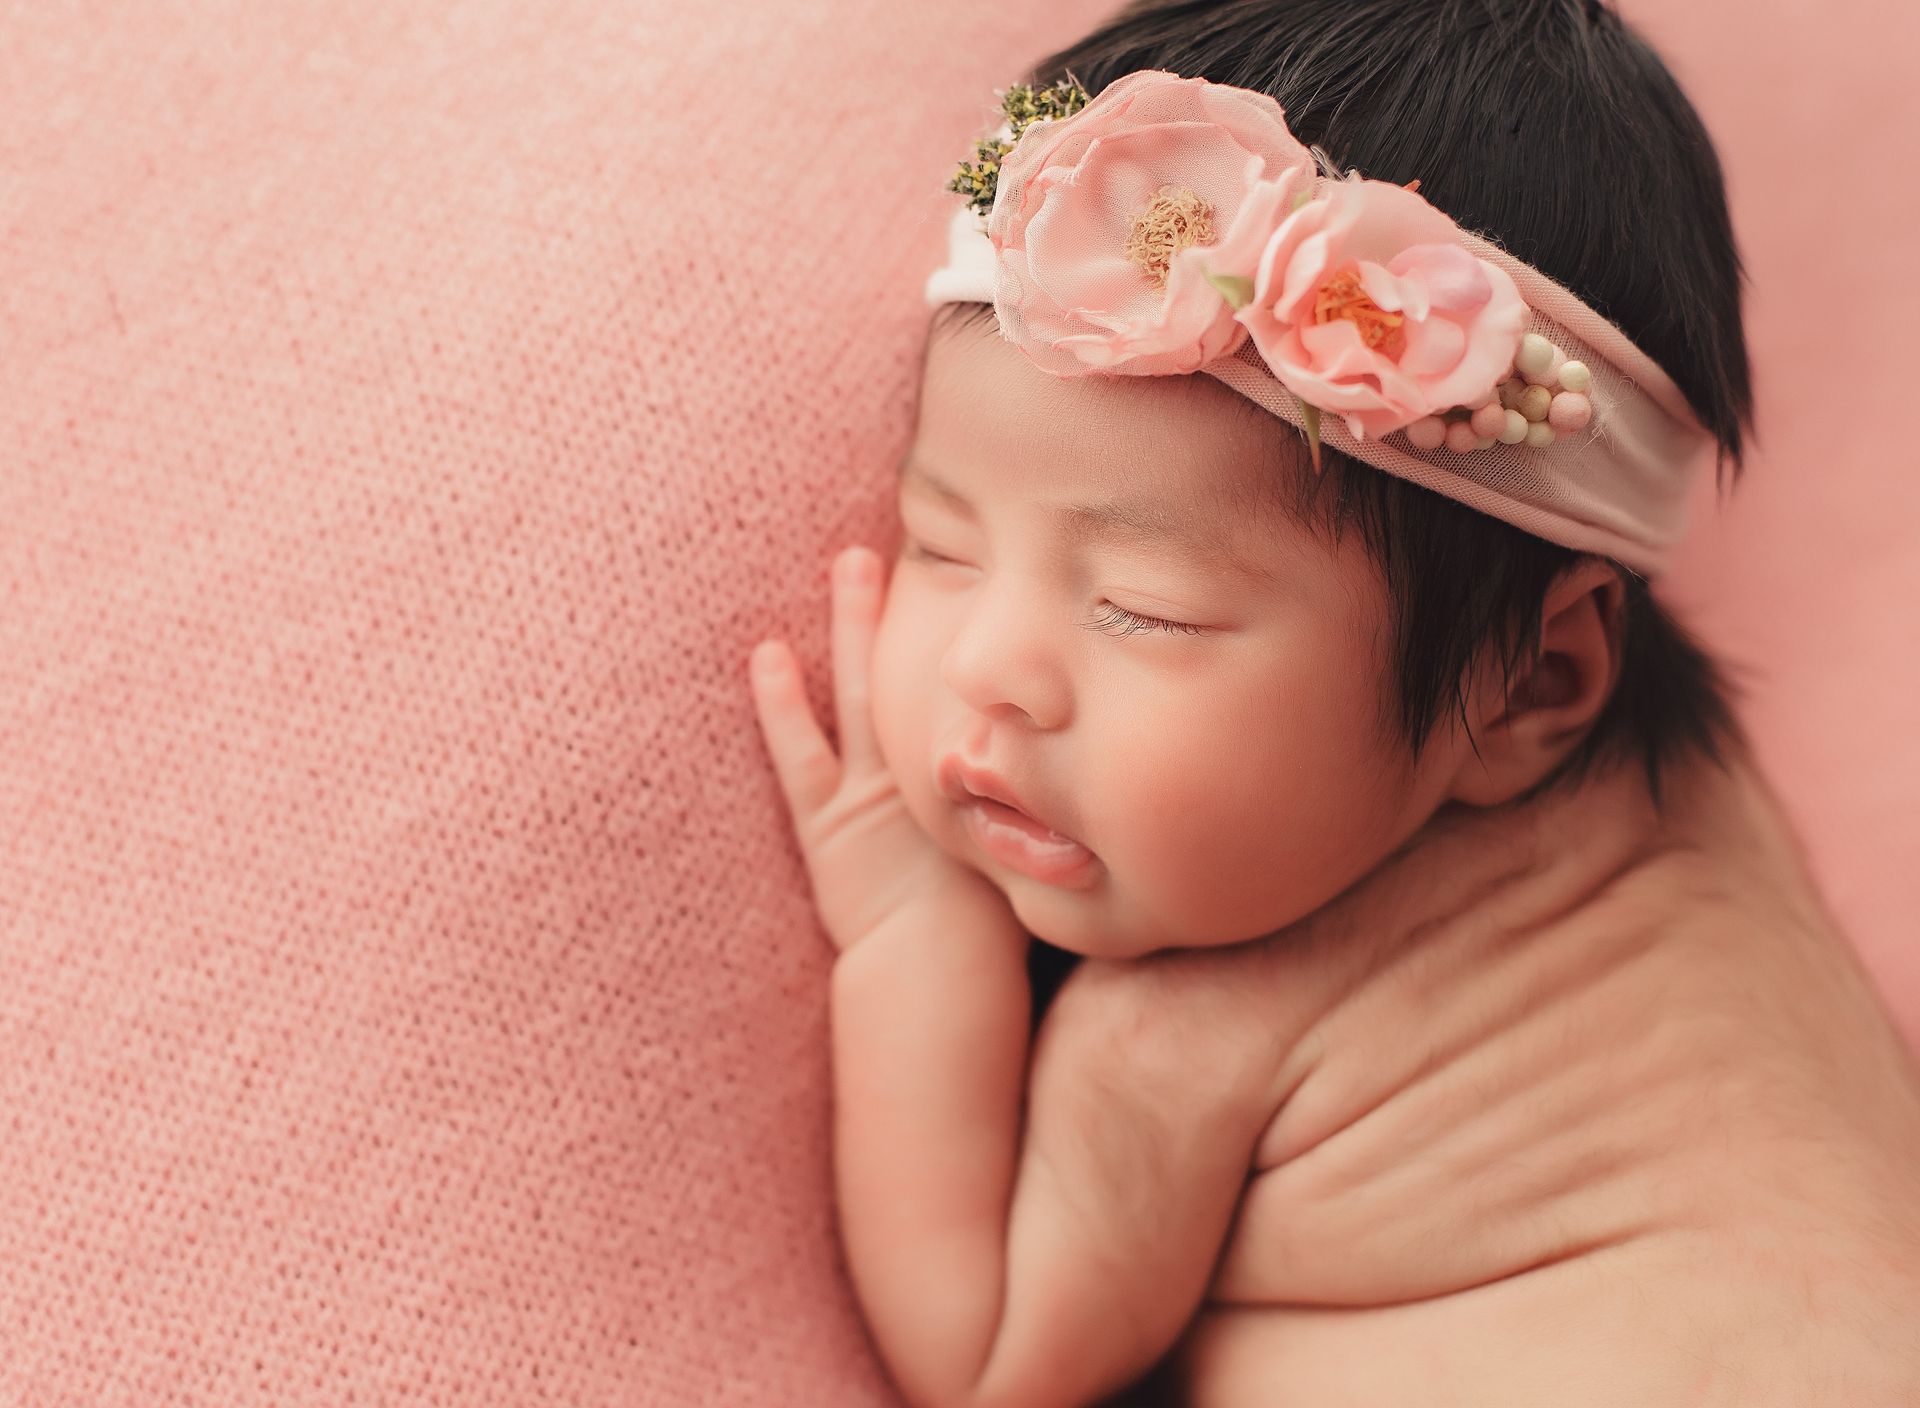 A newborn baby girl wearing a pink headband is sleeping on a pink blanket.